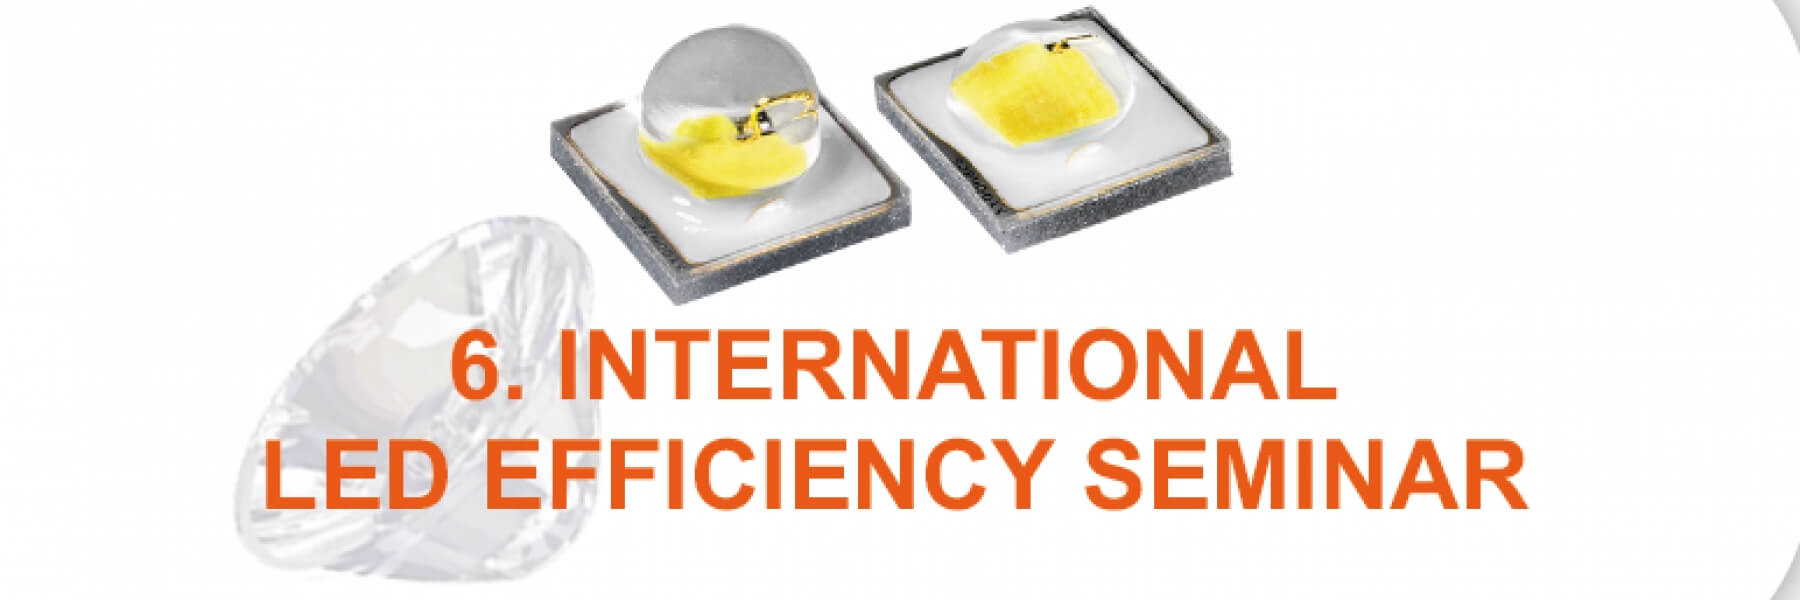 6th International LED Efficiency Seminar